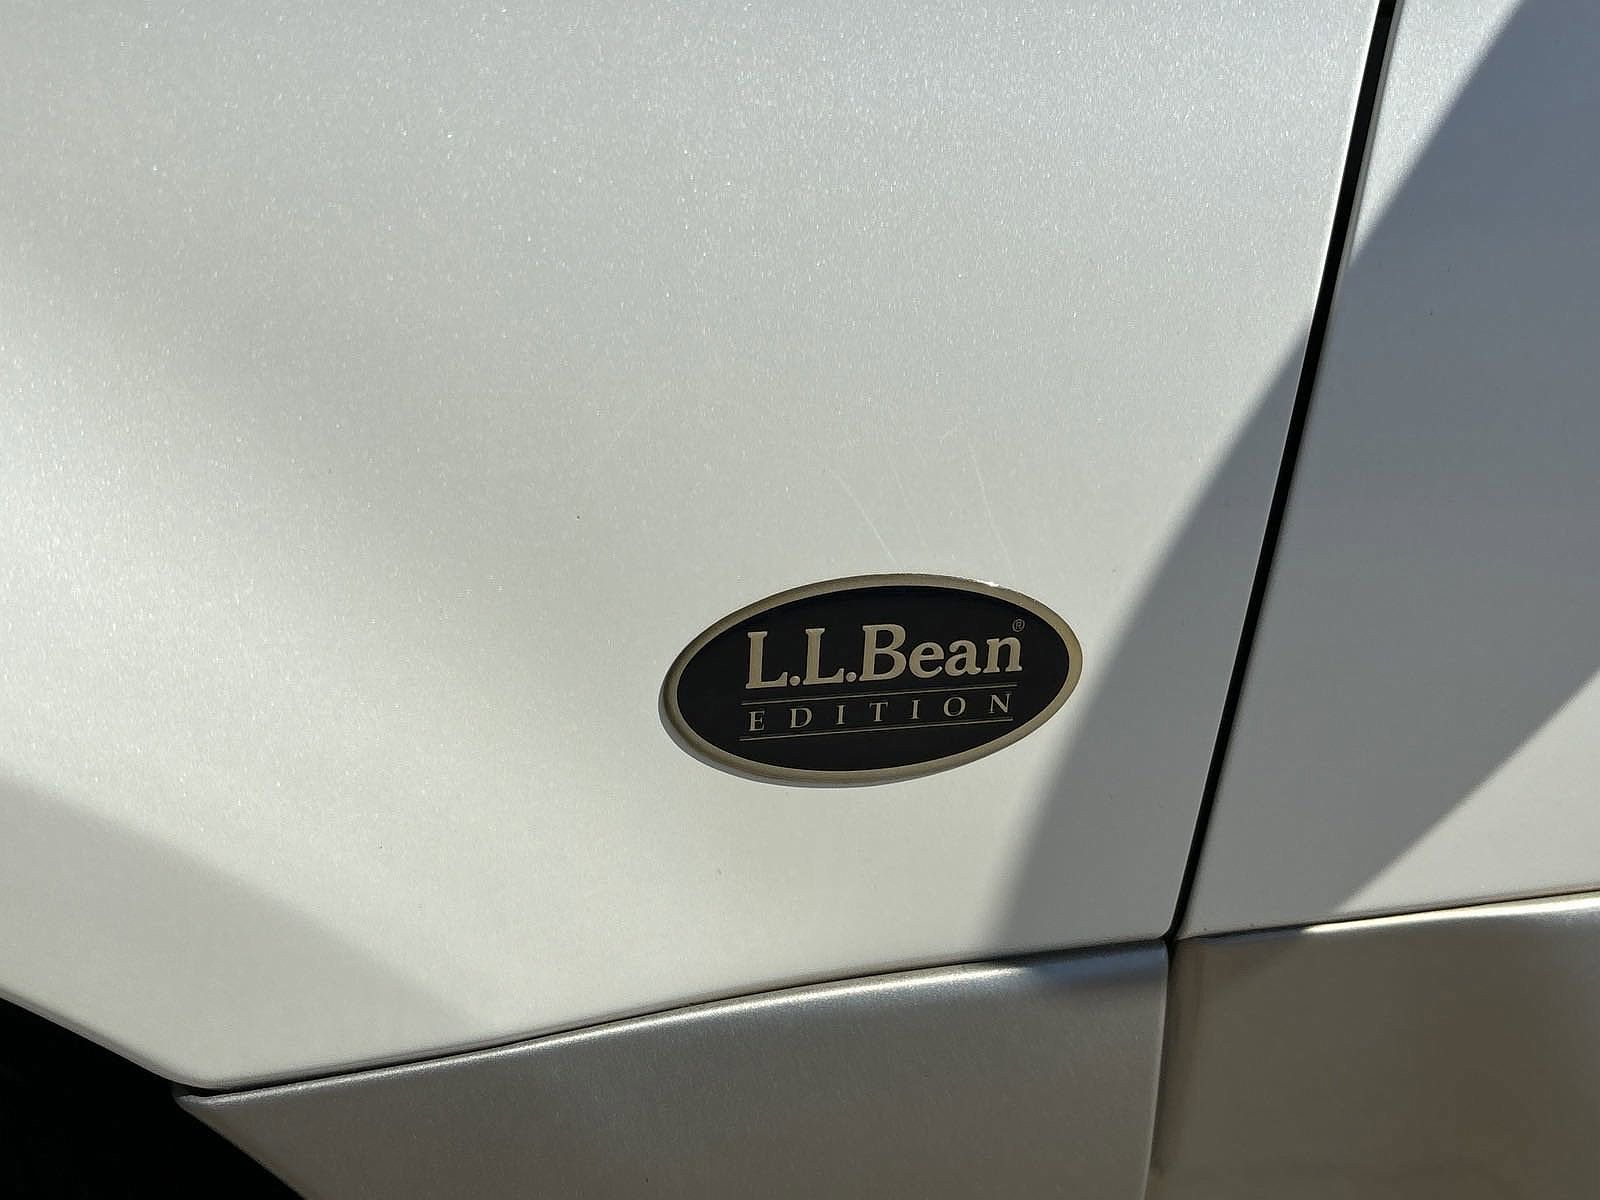 2001 Subaru Outback L.L. Bean Edition image 12